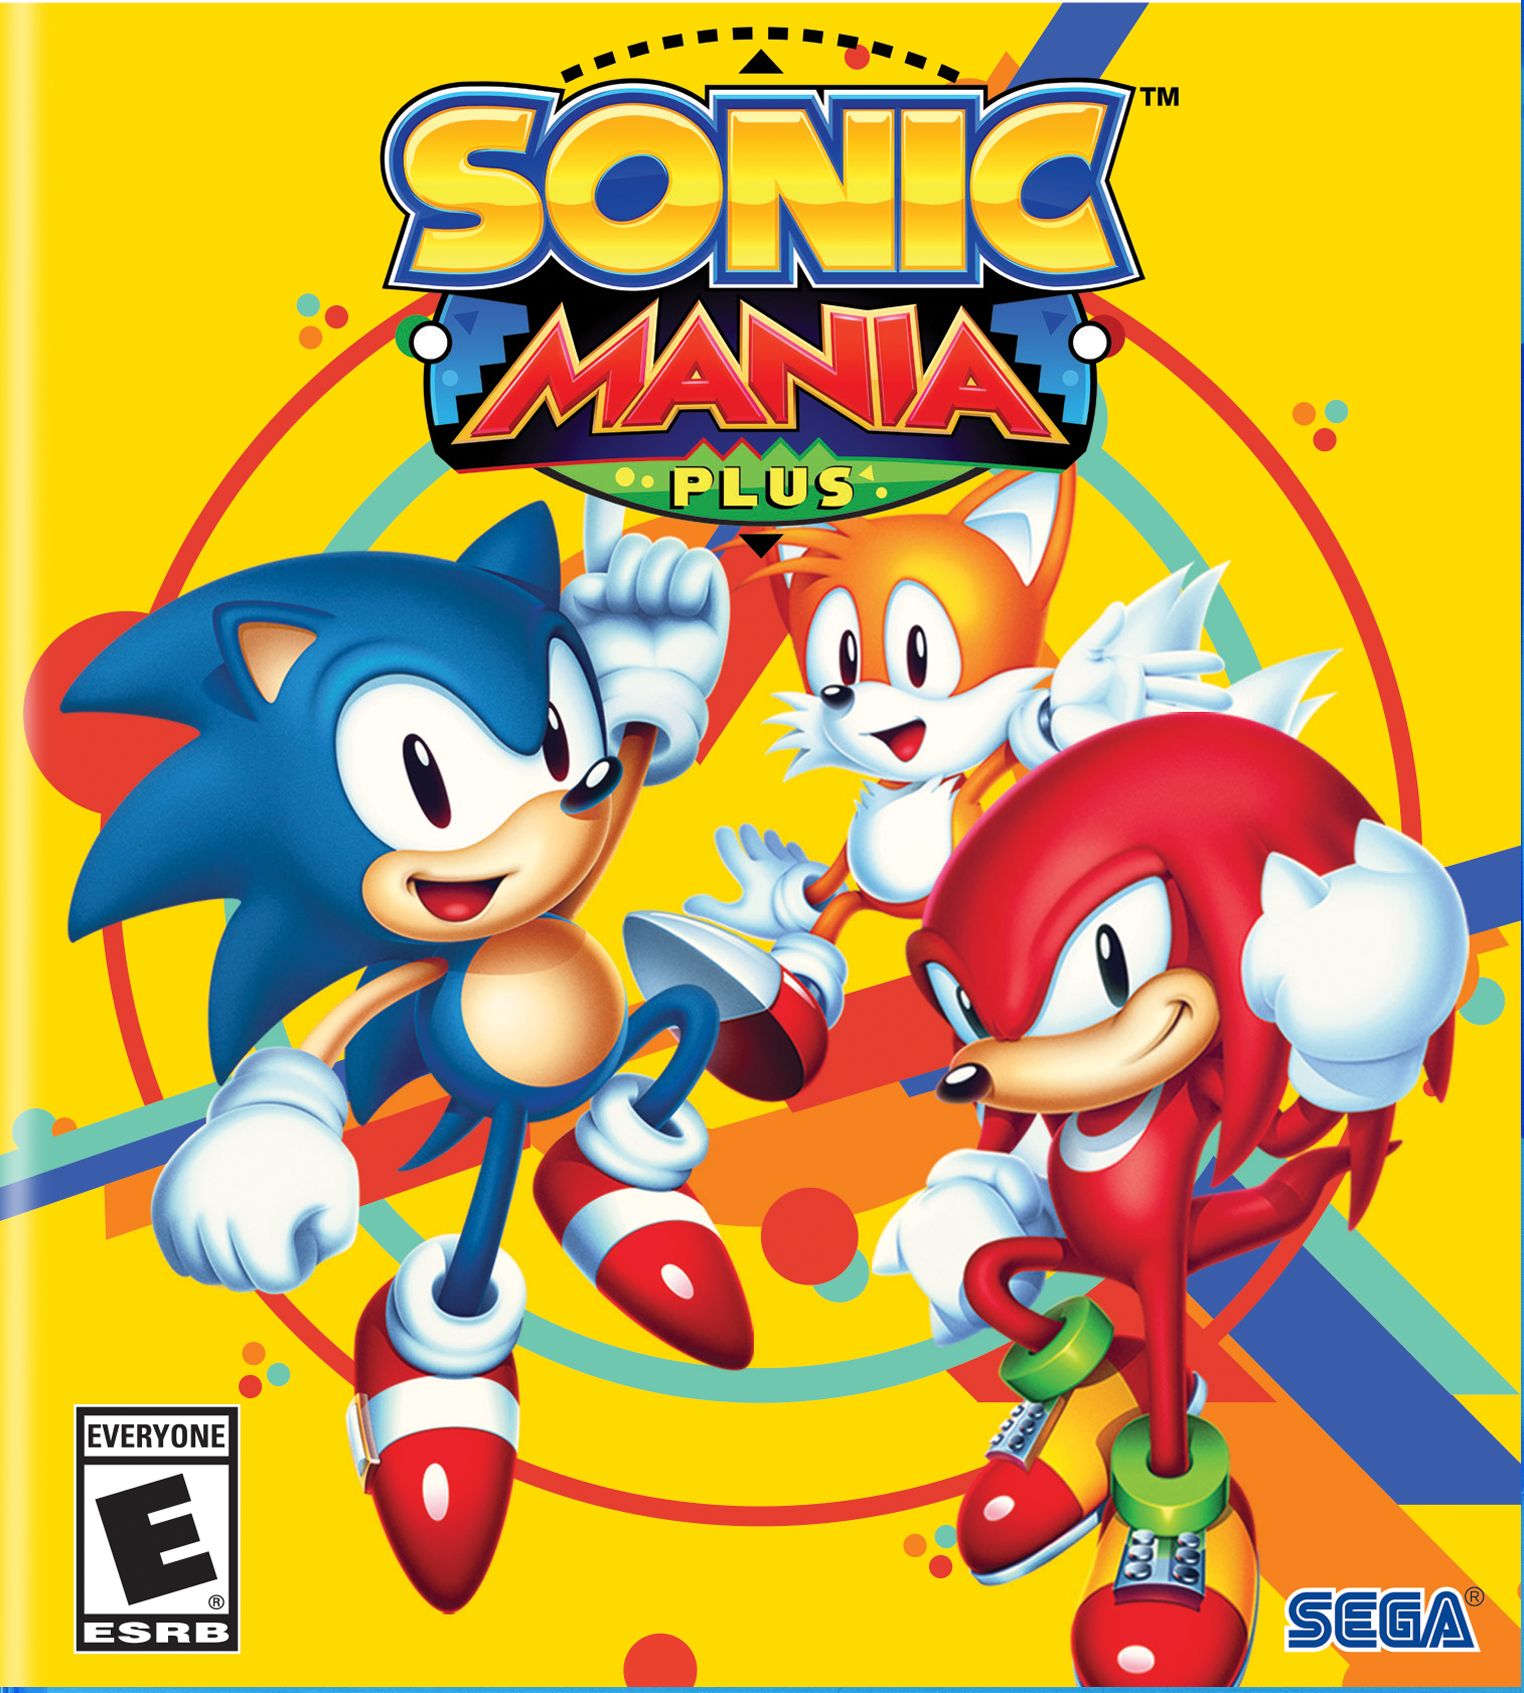 New Sonic Mania Plus Details Emerge - My Nintendo News